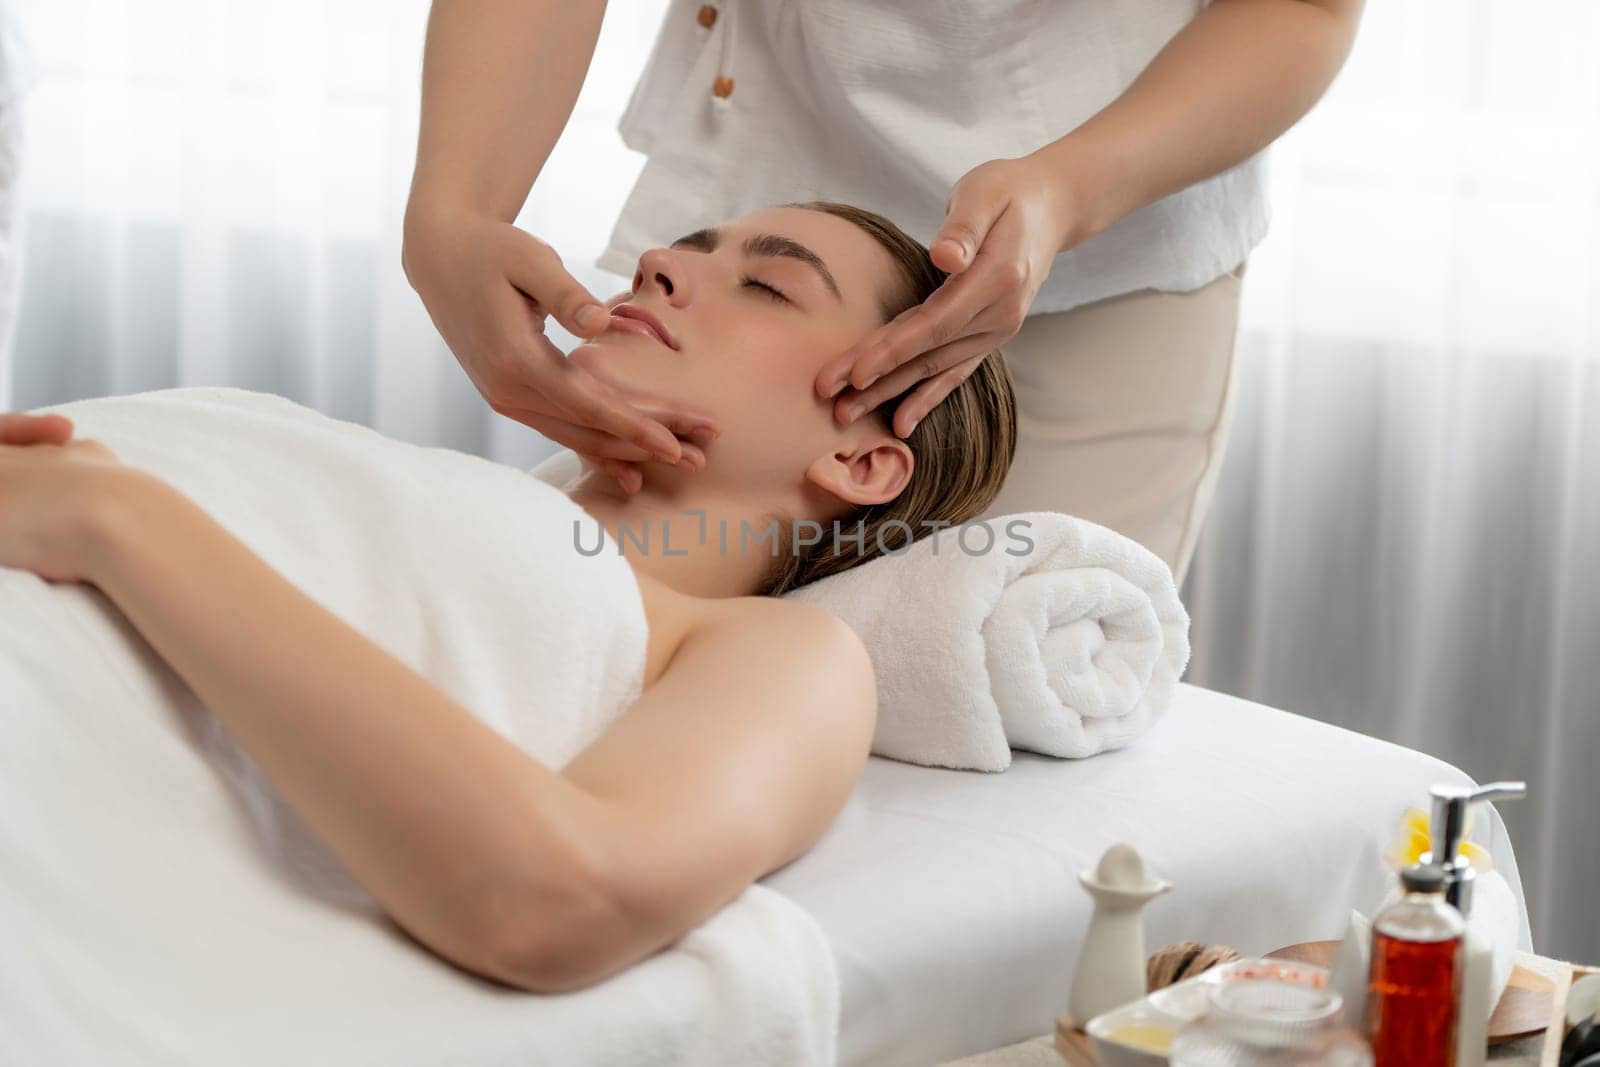 Caucasian woman enjoying relaxing anti-stress head massage. Quiescent by biancoblue